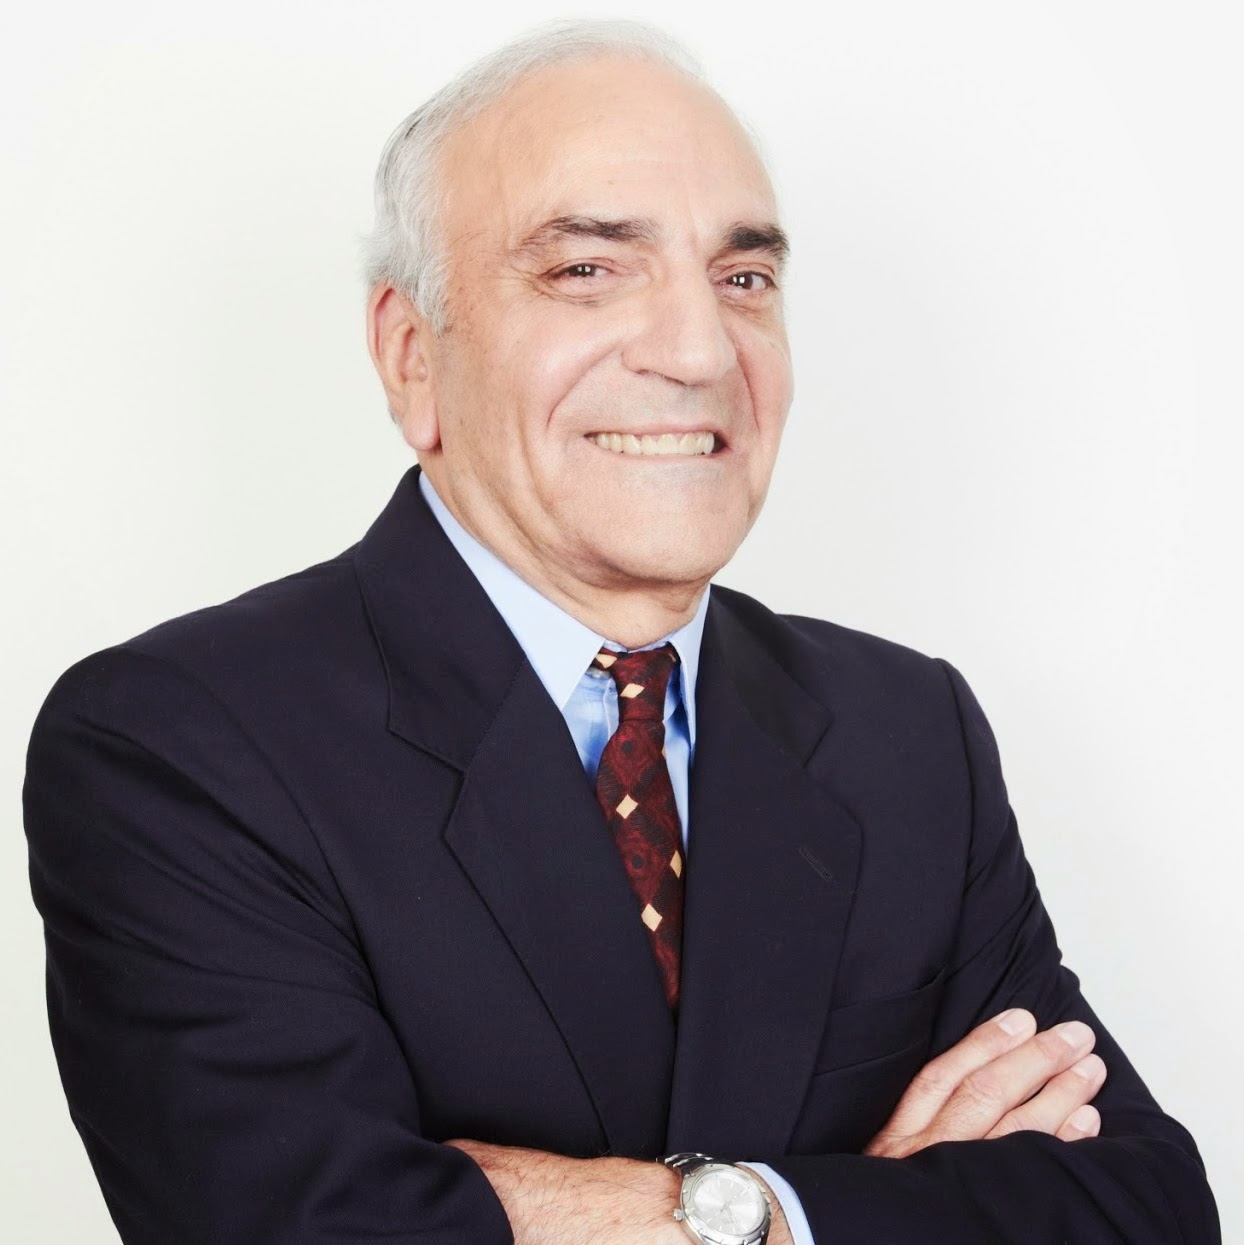 Photo of Dr. Joseph Dello Russo in New York City, New York, United States - 1 Picture of Point of interest, Establishment, Health, Doctor